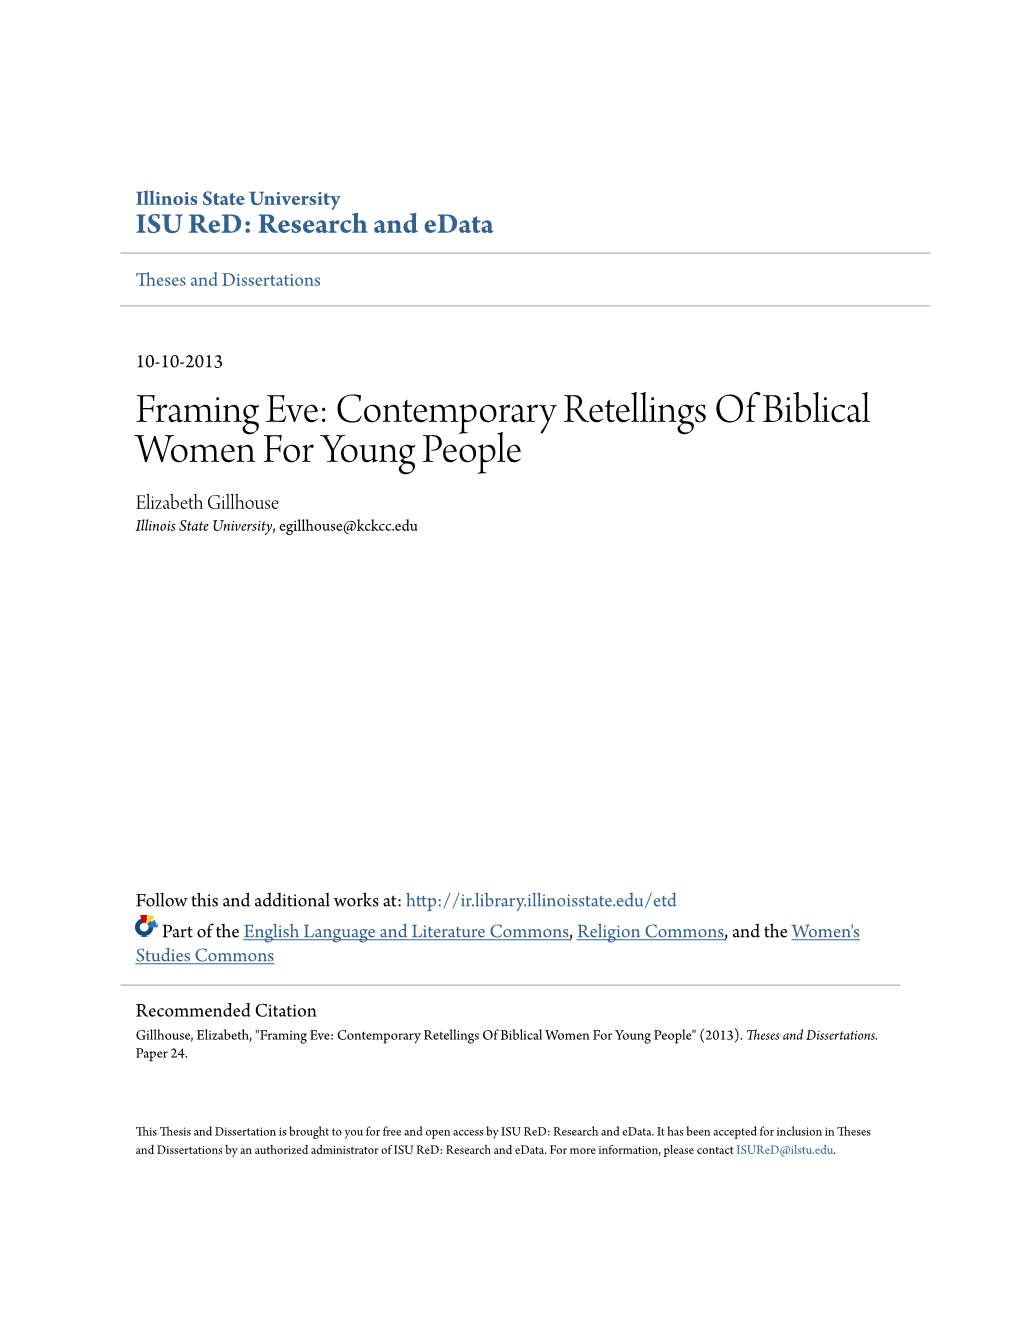 Framing Eve: Contemporary Retellings of Biblical Women for Young People Elizabeth Gillhouse Illinois State University, Egillhouse@Kckcc.Edu